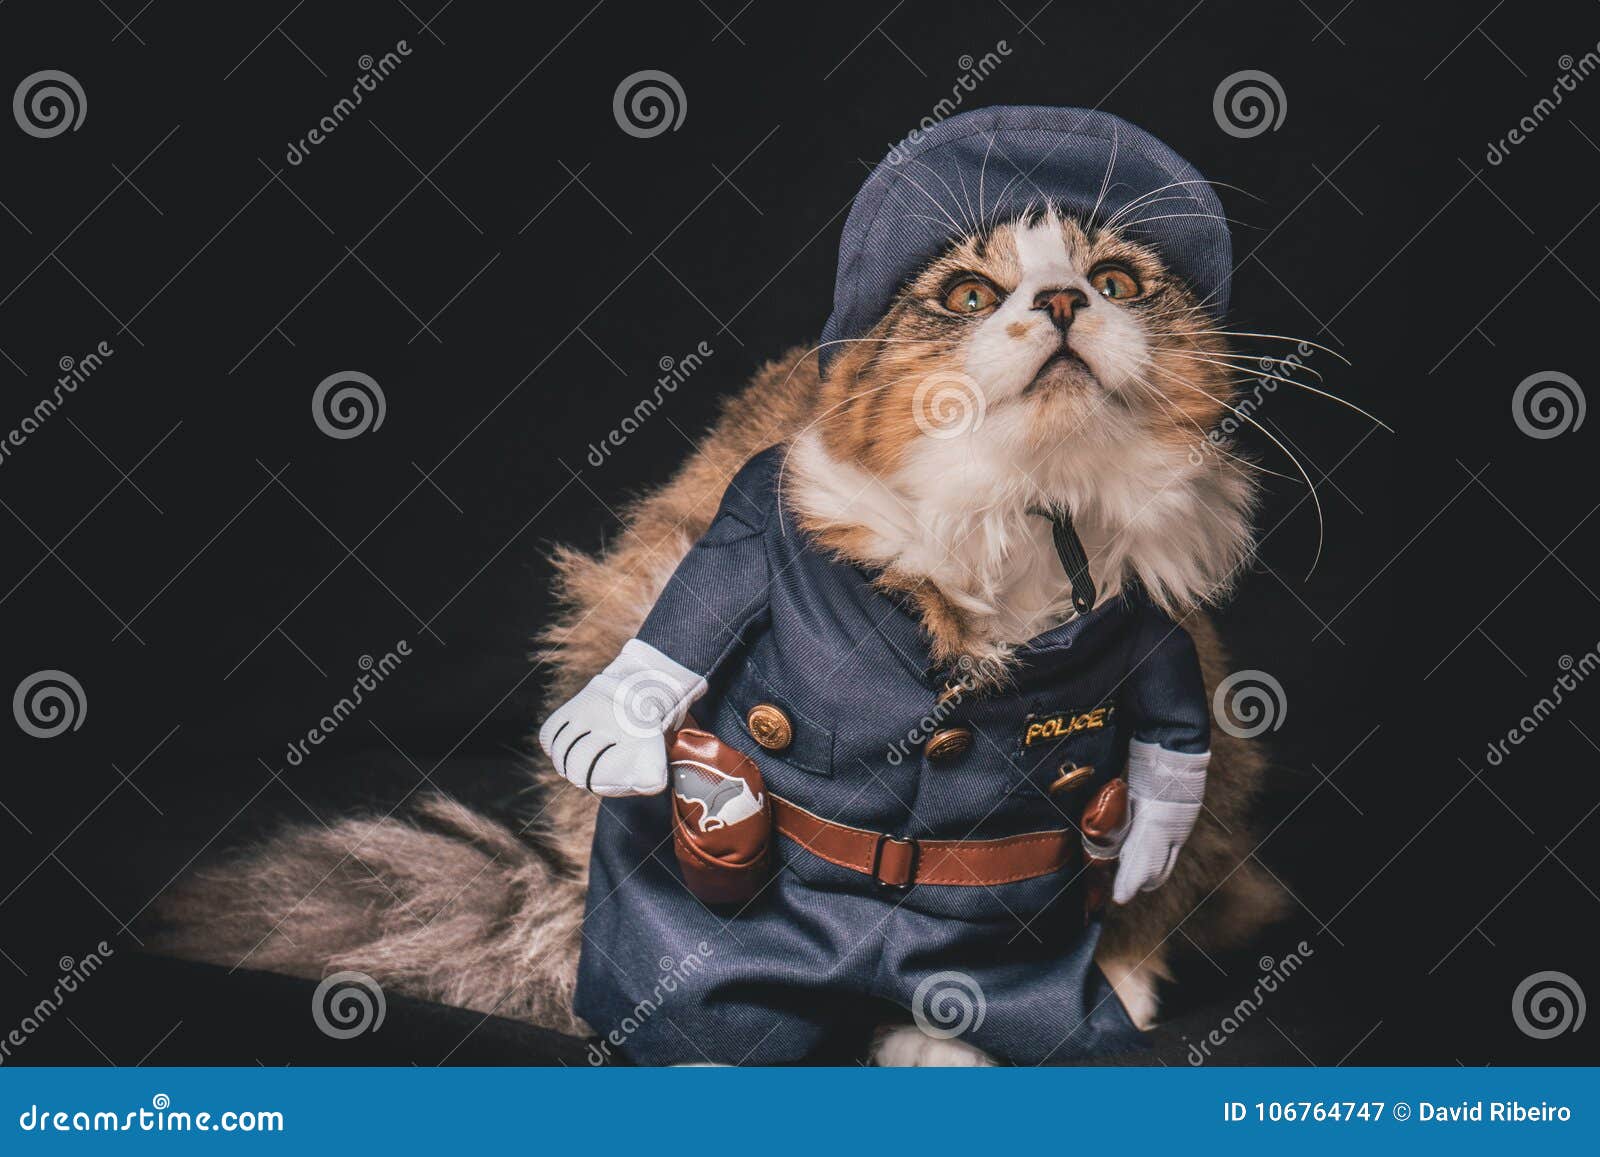 Cat Policeman Stock Photos - Free & Royalty-Free Stock Photos from